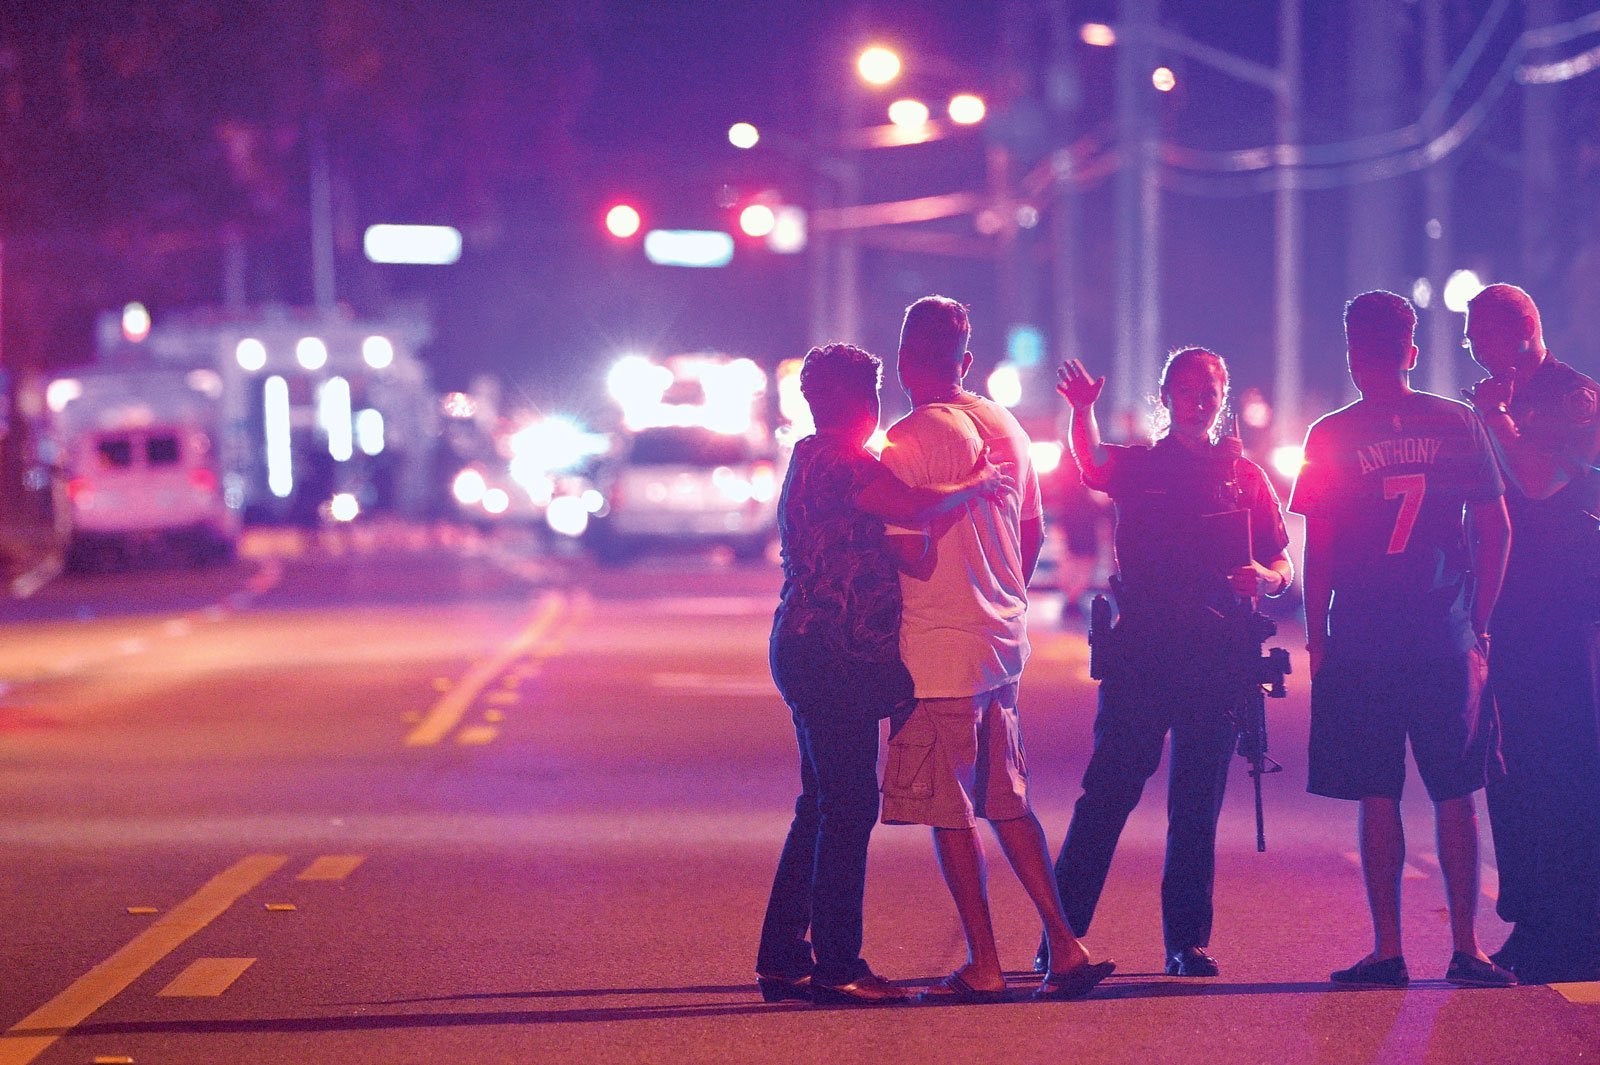 Orlando shooting of 2016 | Timeline, Motive, Deaths, & Facts | Britannica